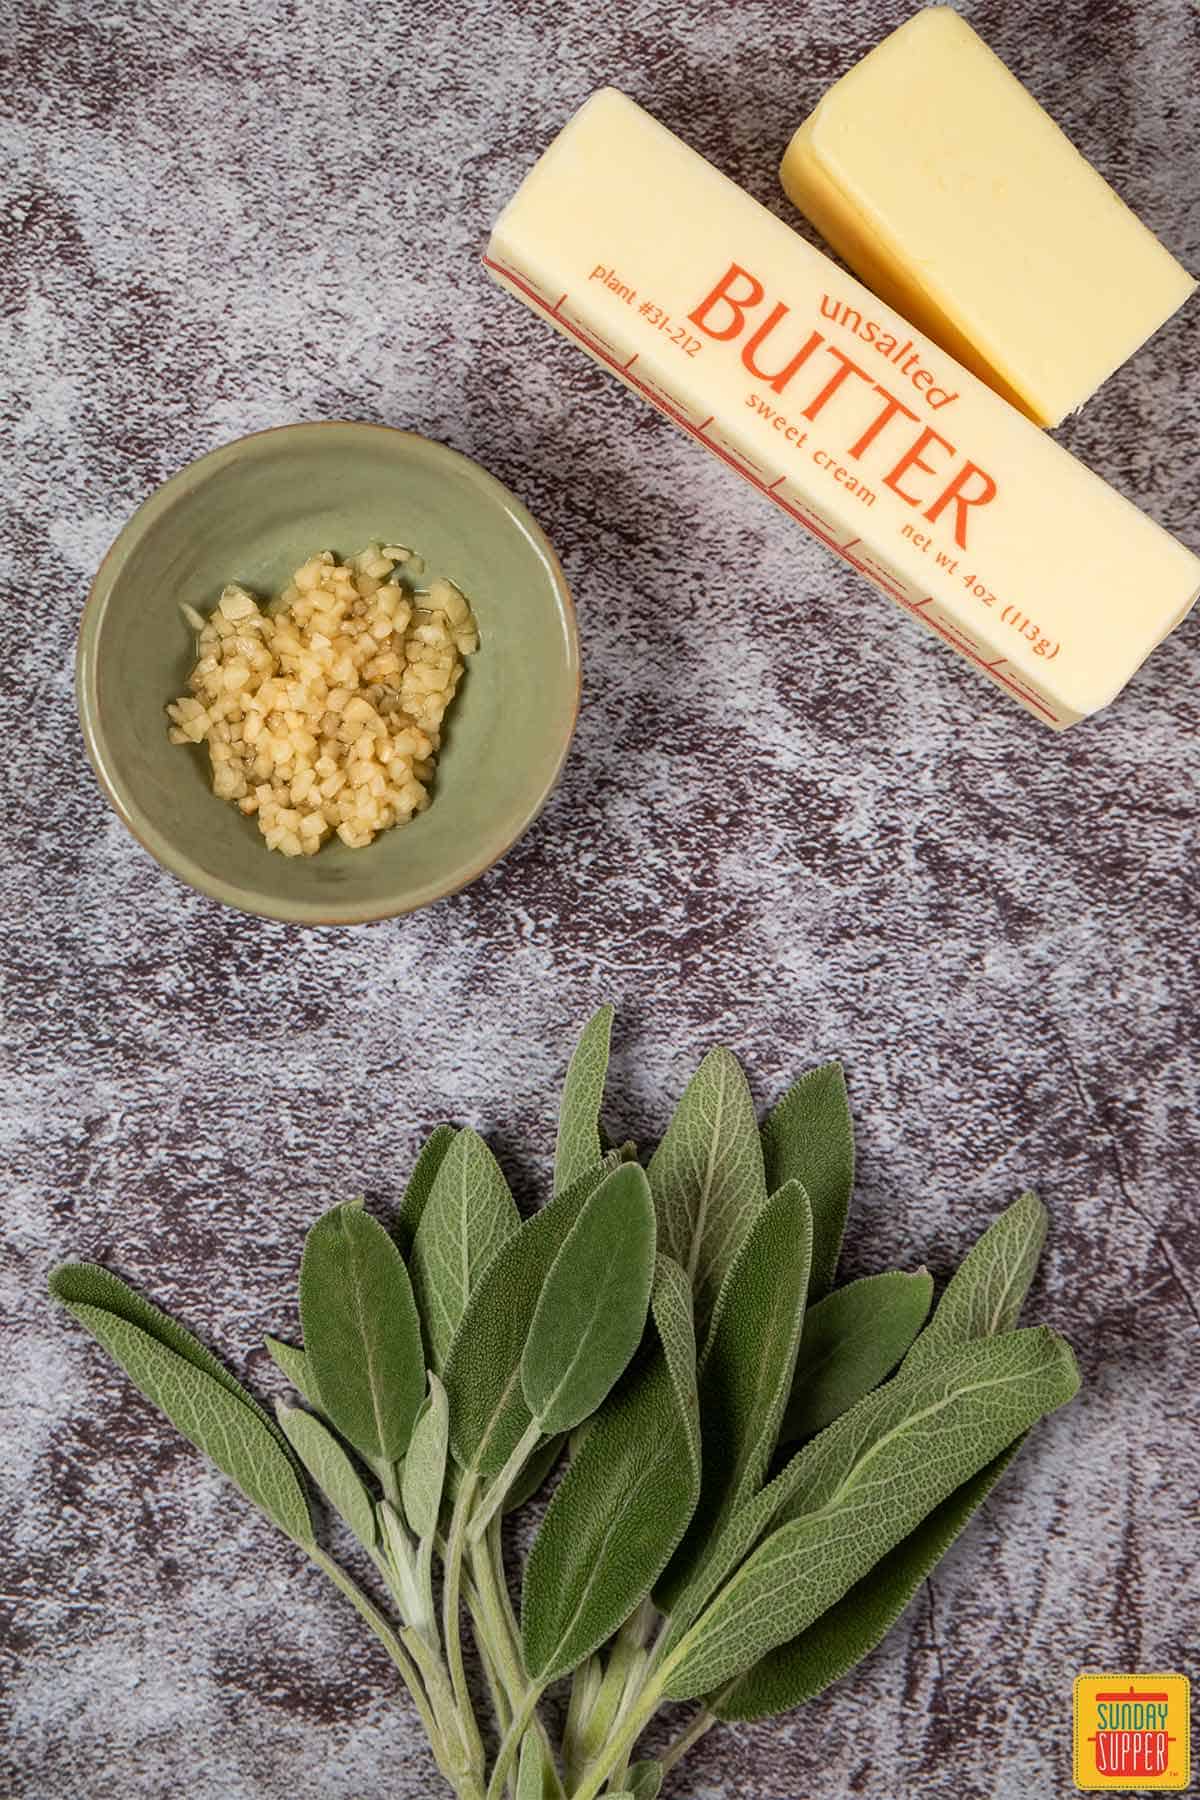 Ingredients for sage butter sauce: butter, garlic, sage